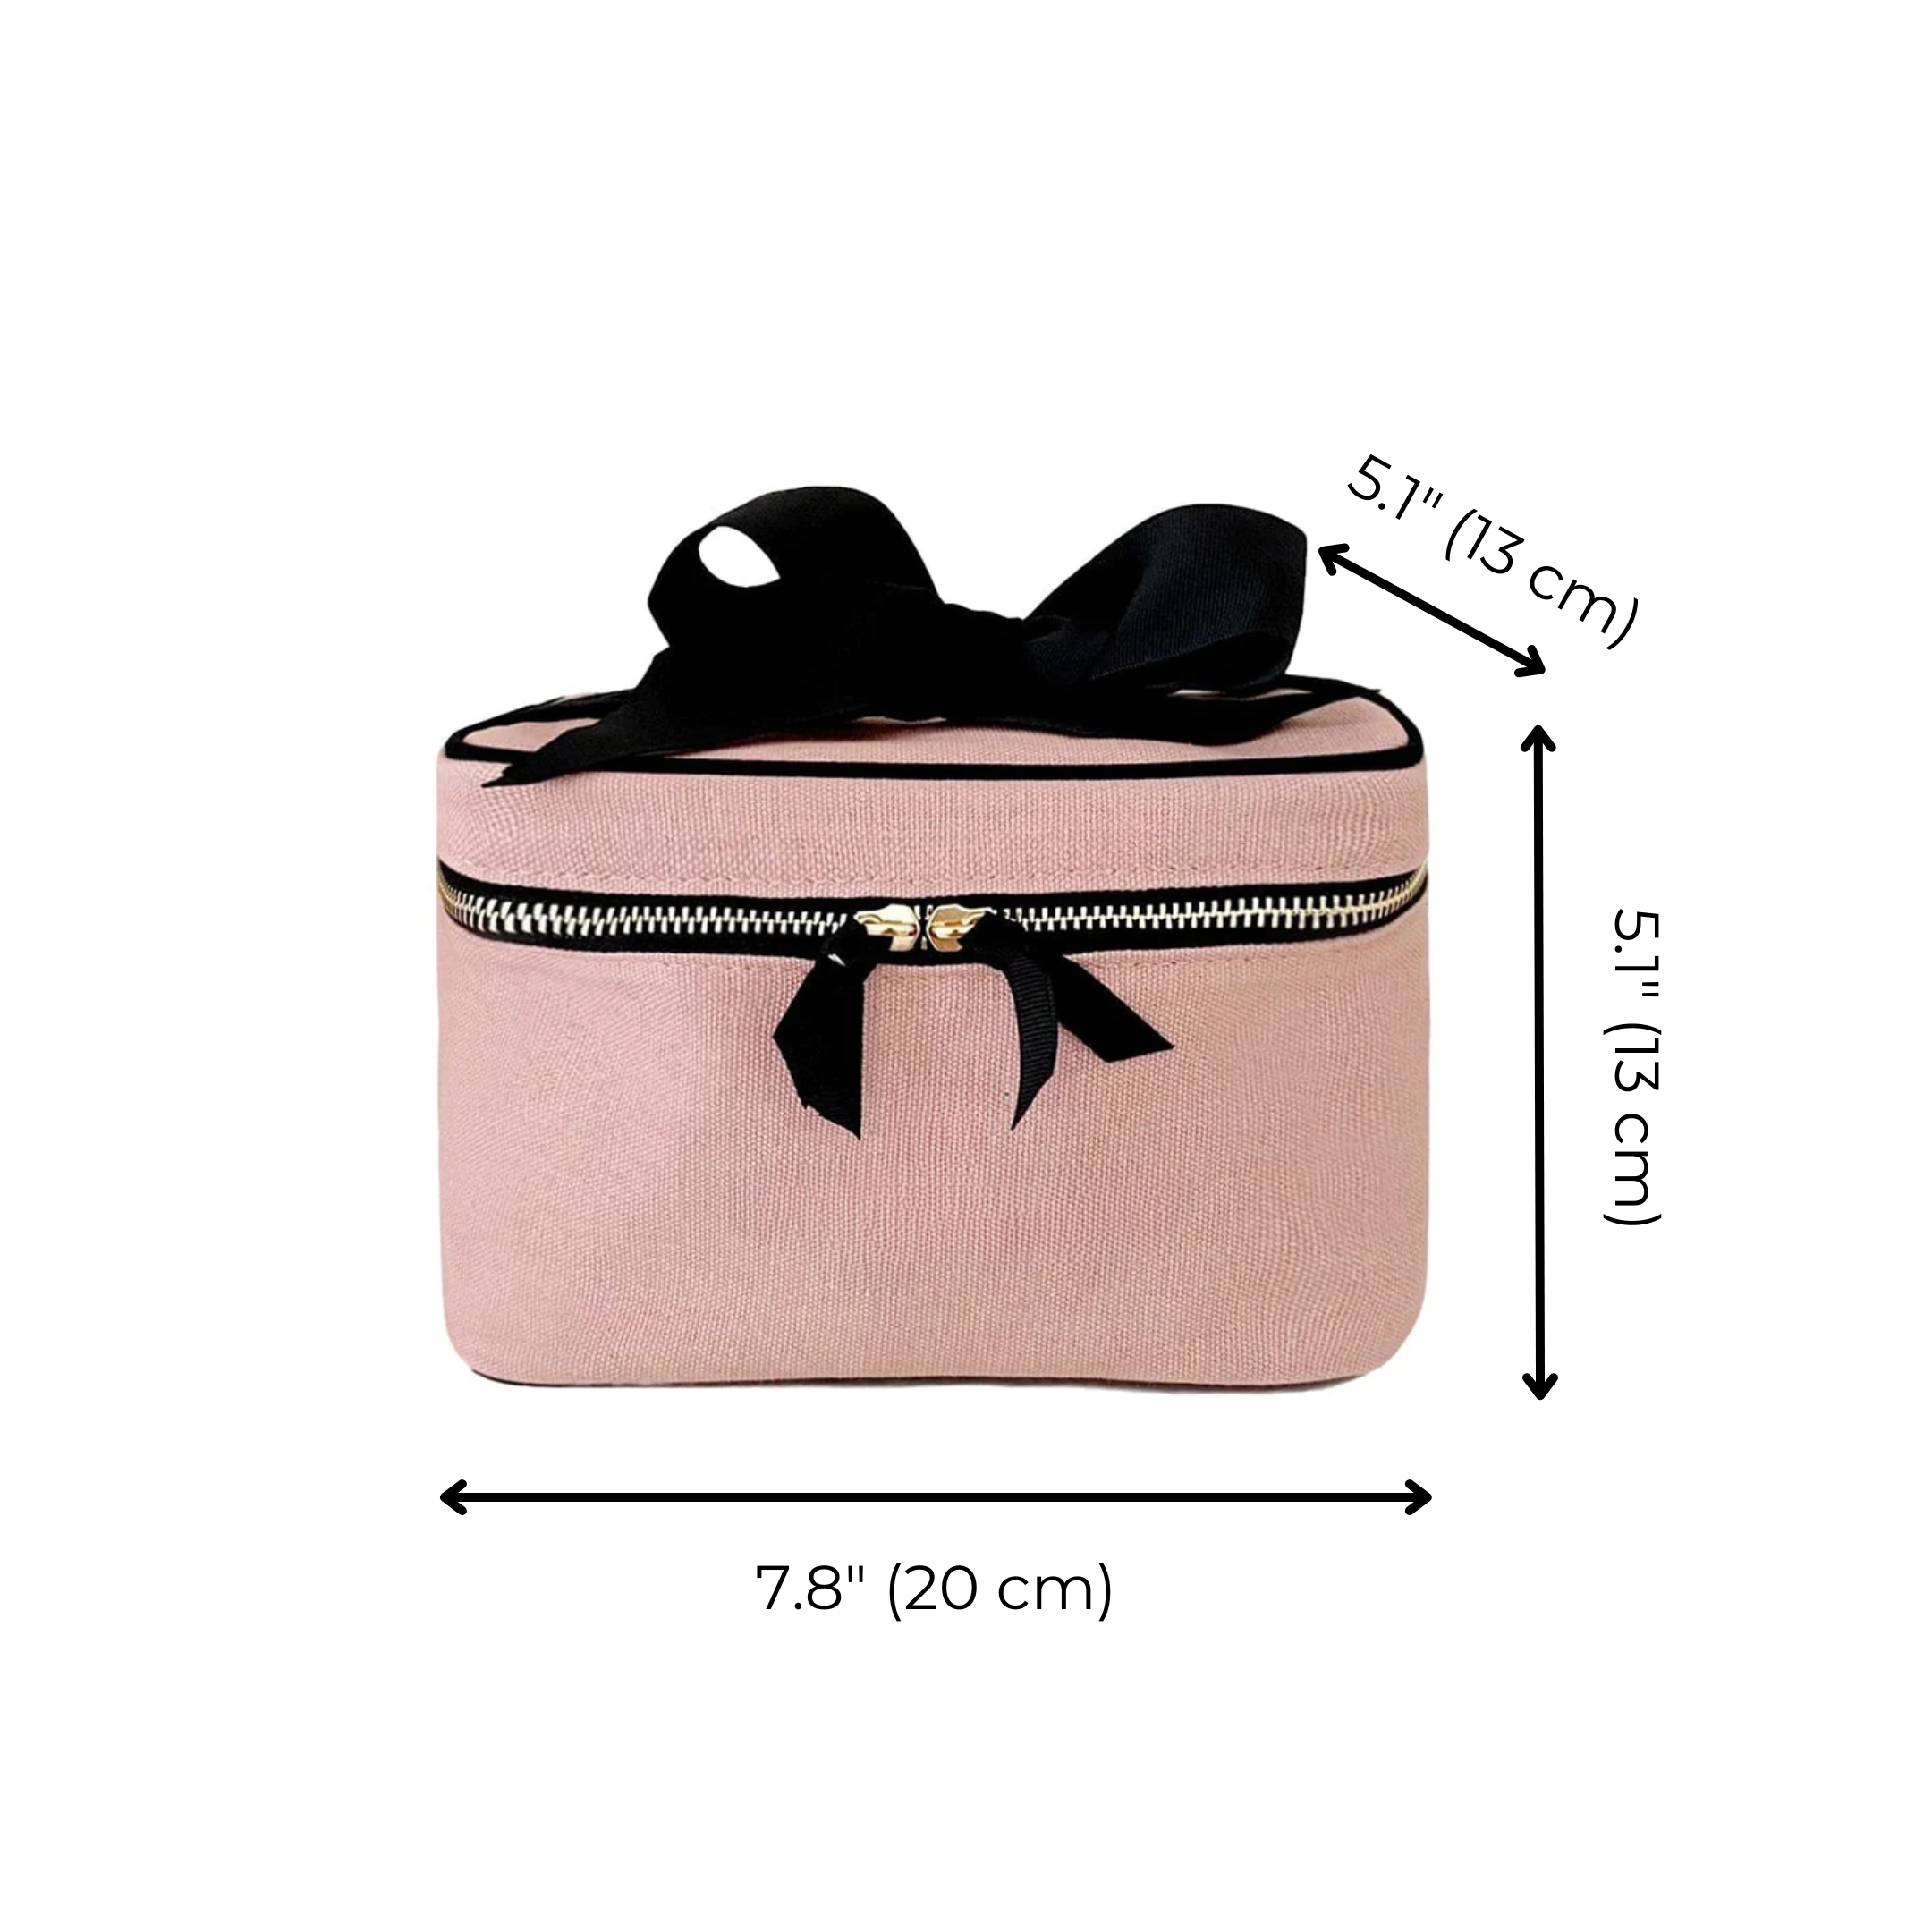 Beauty Box Blank, Pink/Blush | Bag-all